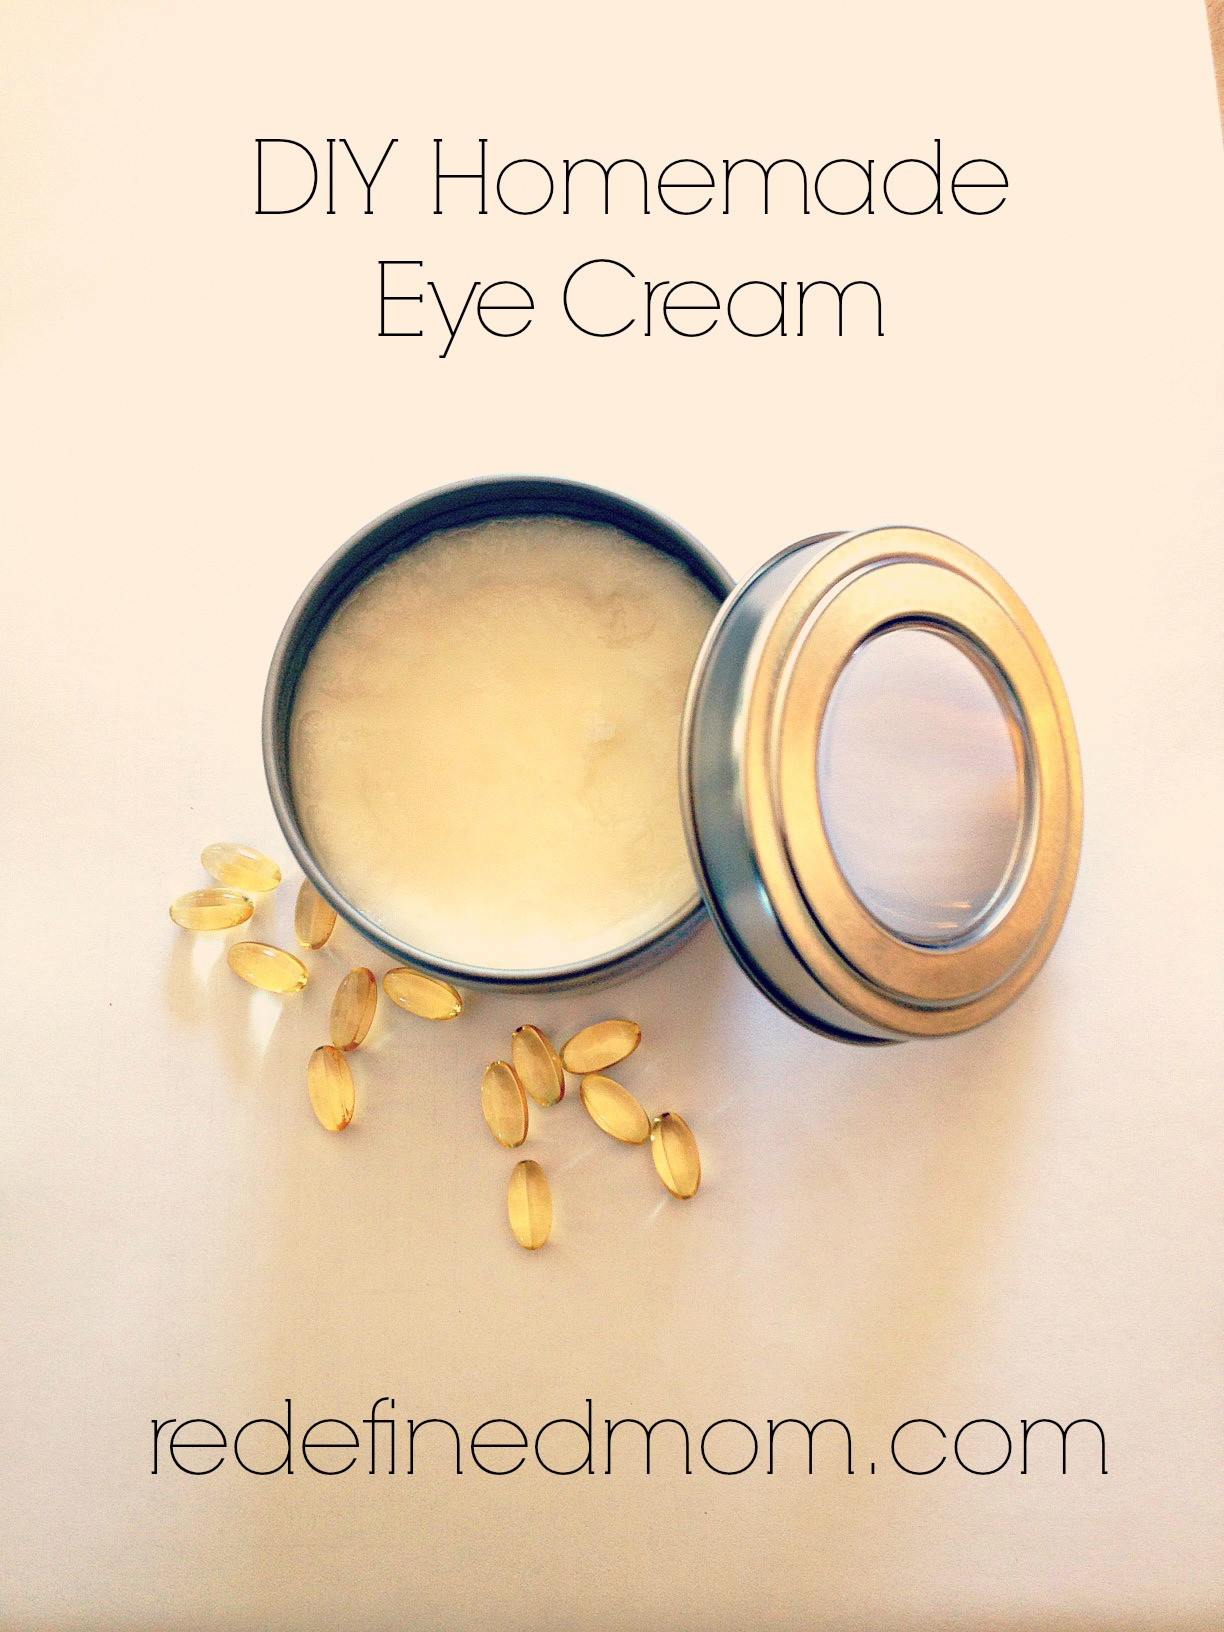 Best ideas about DIY Eye Cream
. Save or Pin DIY Homemade Best Anti Aging Eye Cream Now.